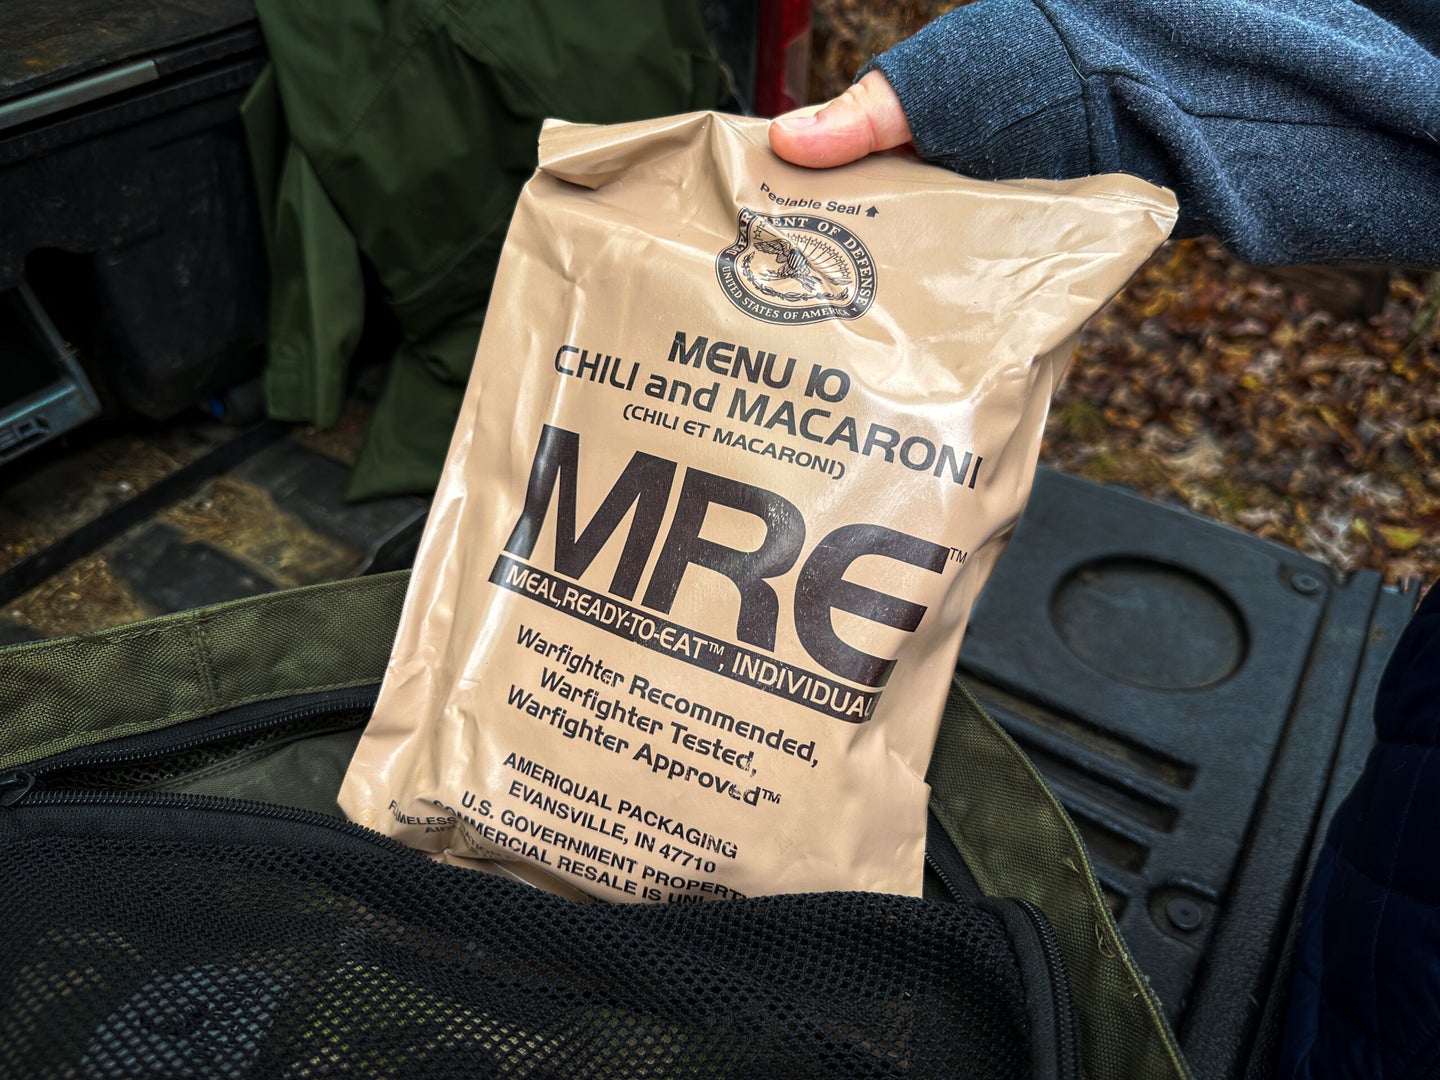 A hiker reaches for an MRE bag on a outdoor trip